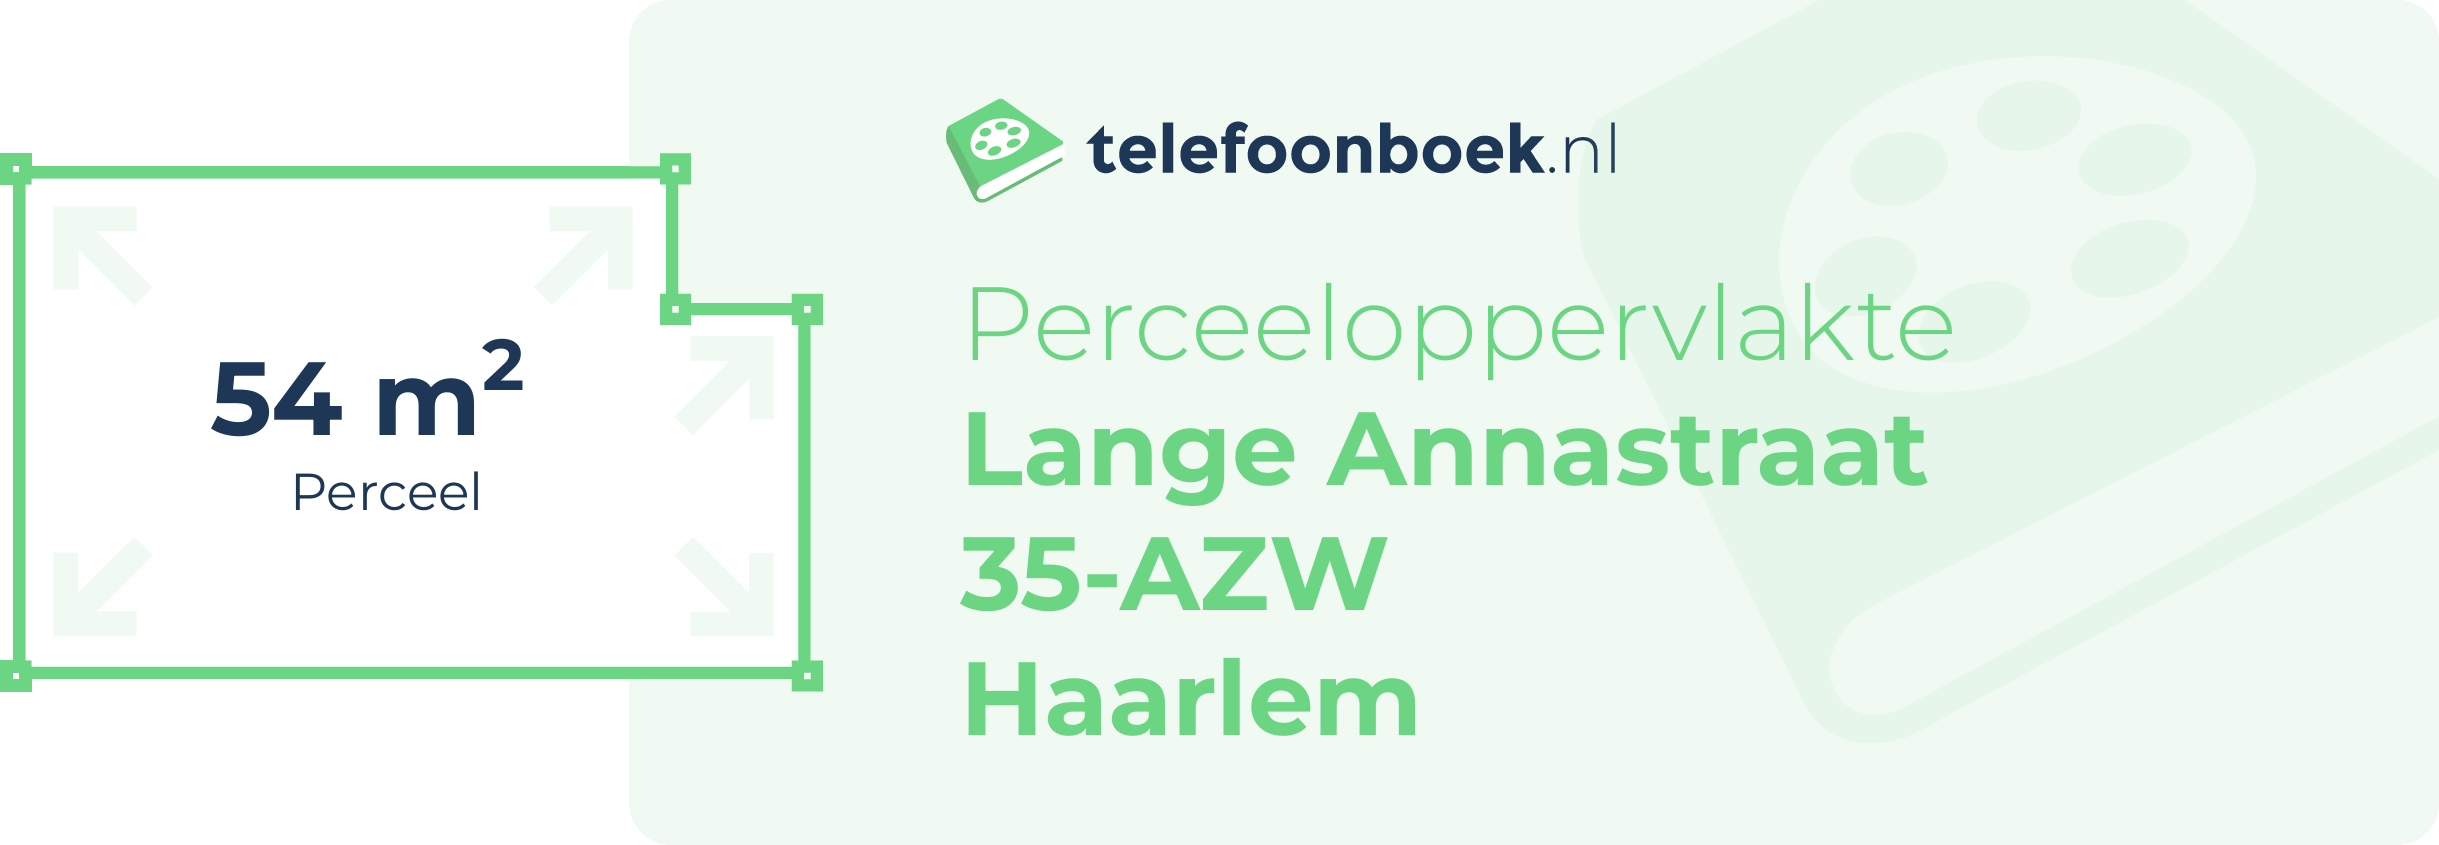 Perceeloppervlakte Lange Annastraat 35-AZW Haarlem